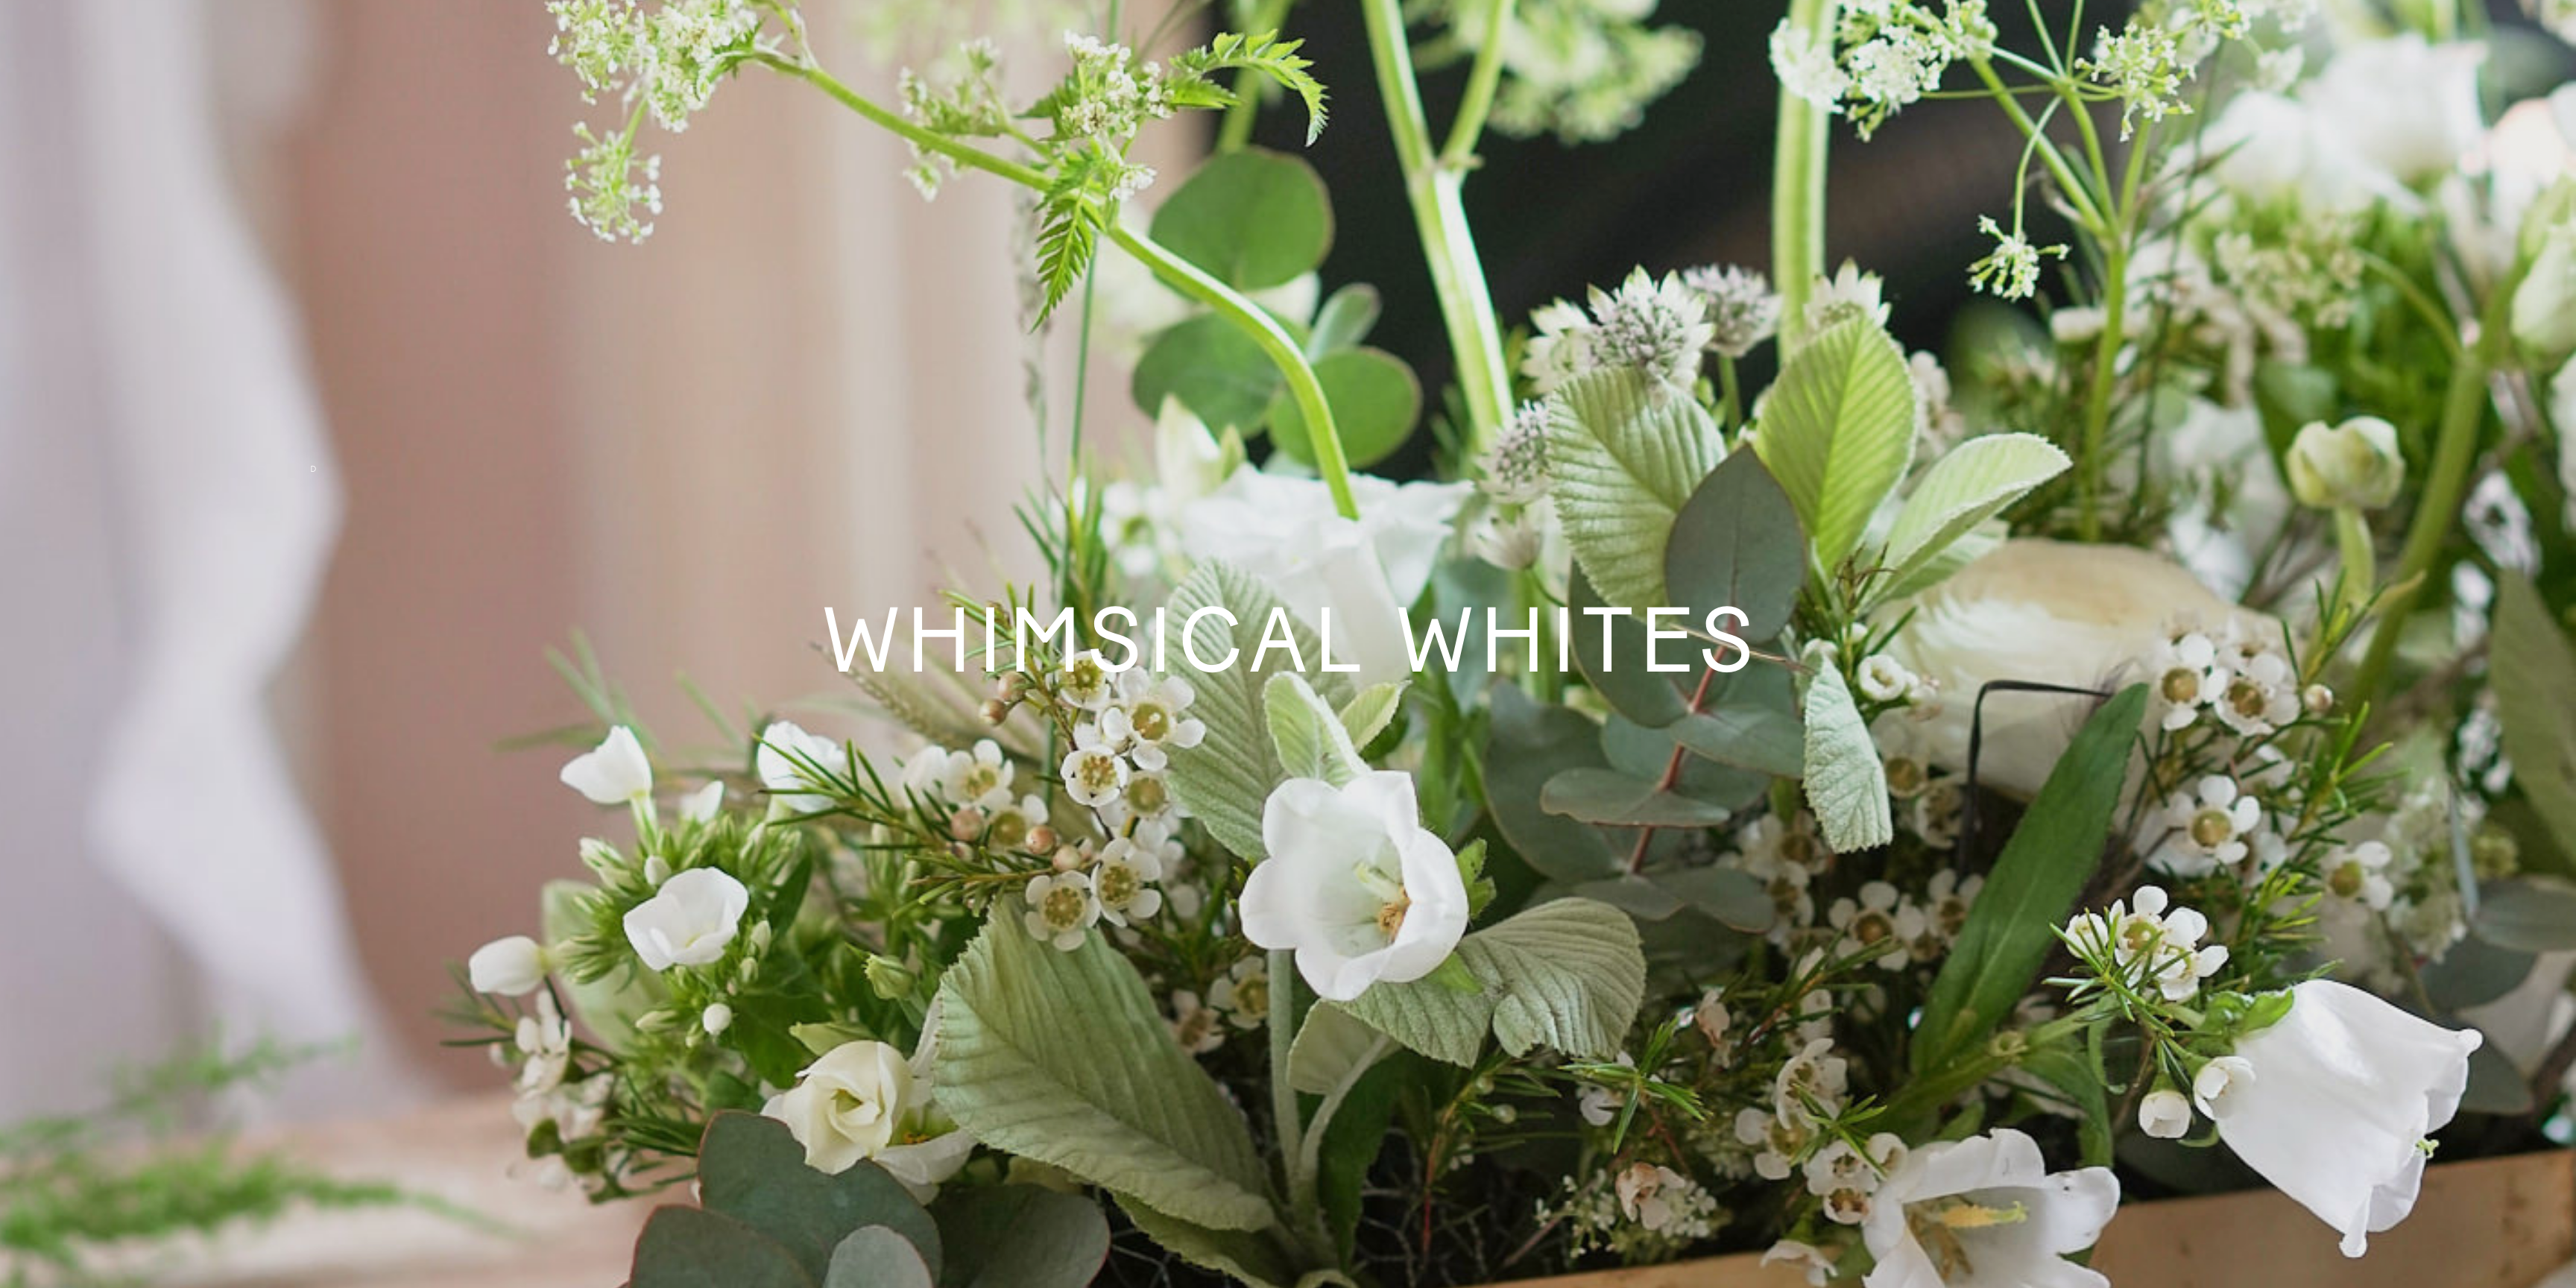 whimsical whites wedding flowers London